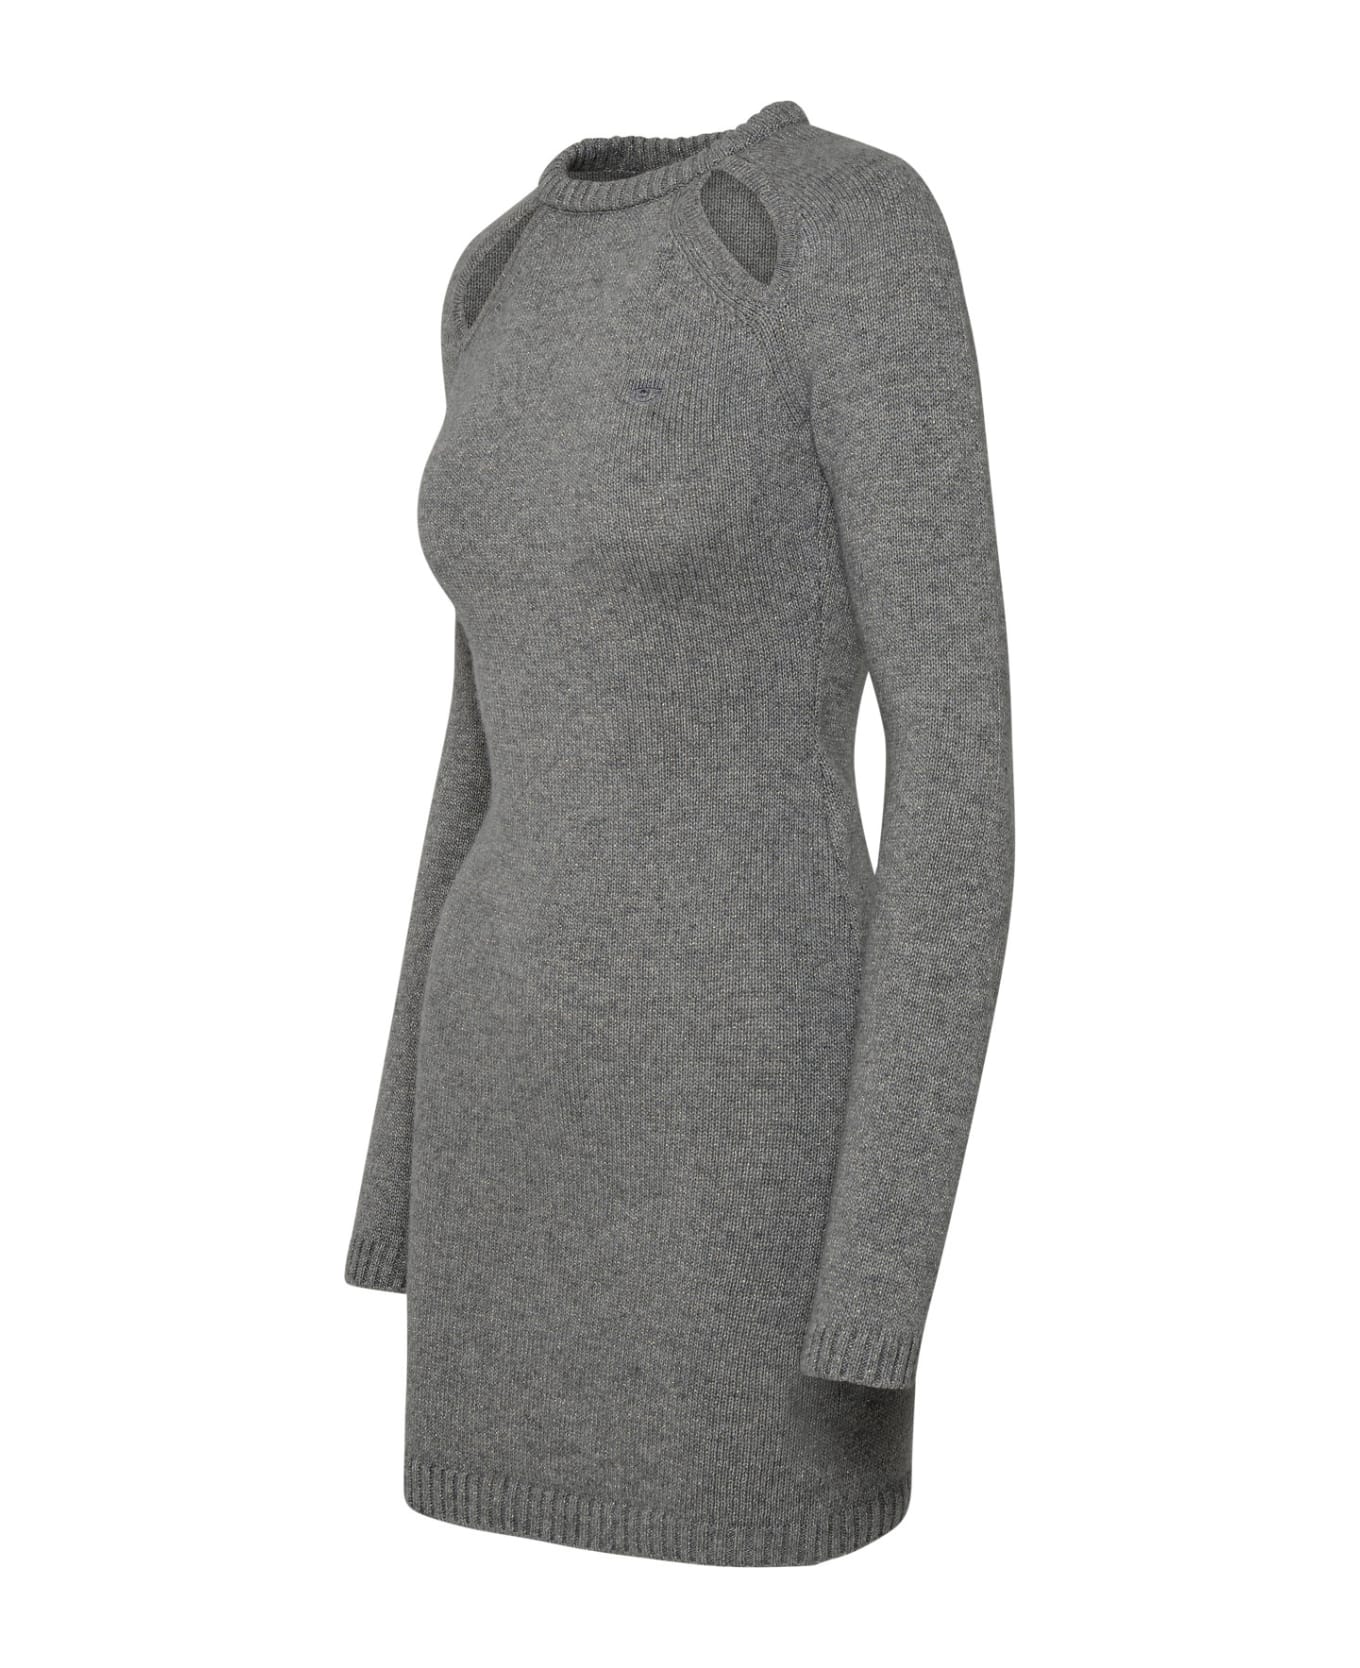 Chiara Ferragni Gray Cashmere Blend Dress - Grey